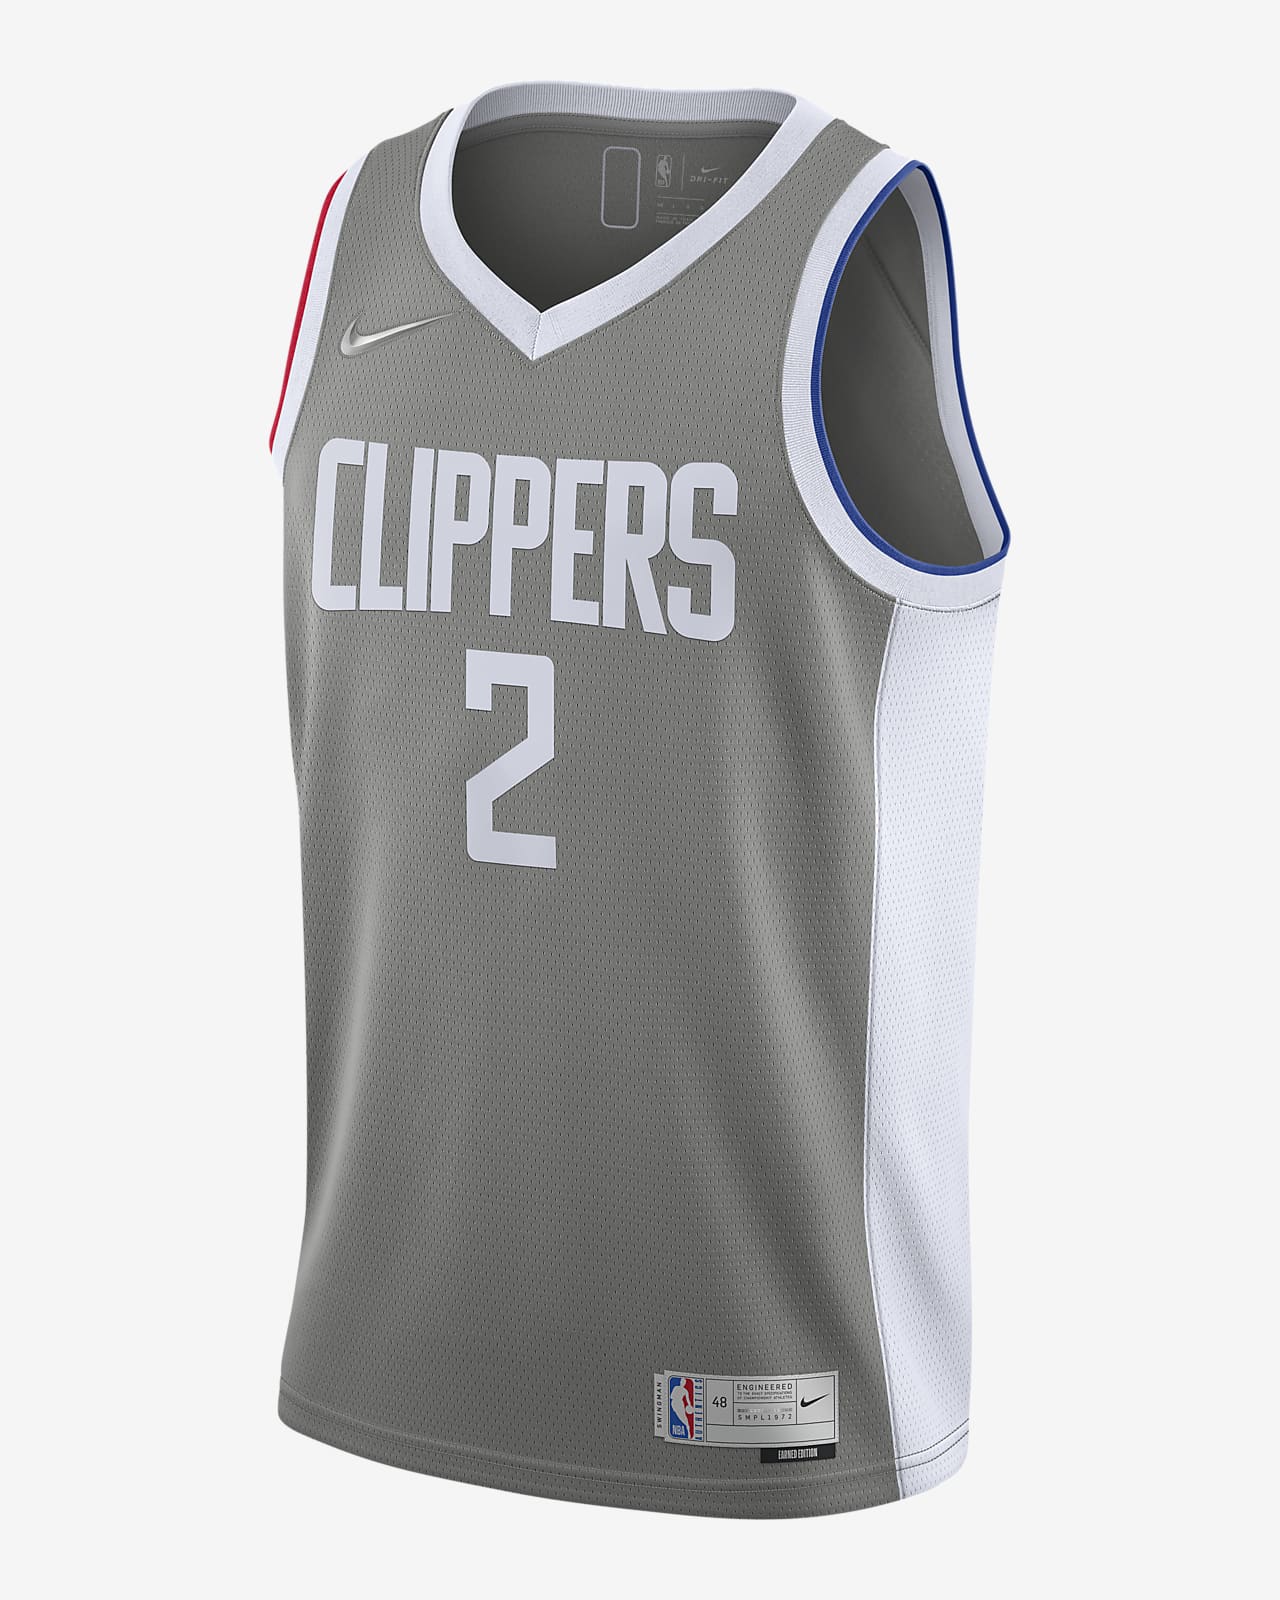 Camiseta Nike NBA Swingman para hombre Kawhi Leonard Clippers Earned Edition